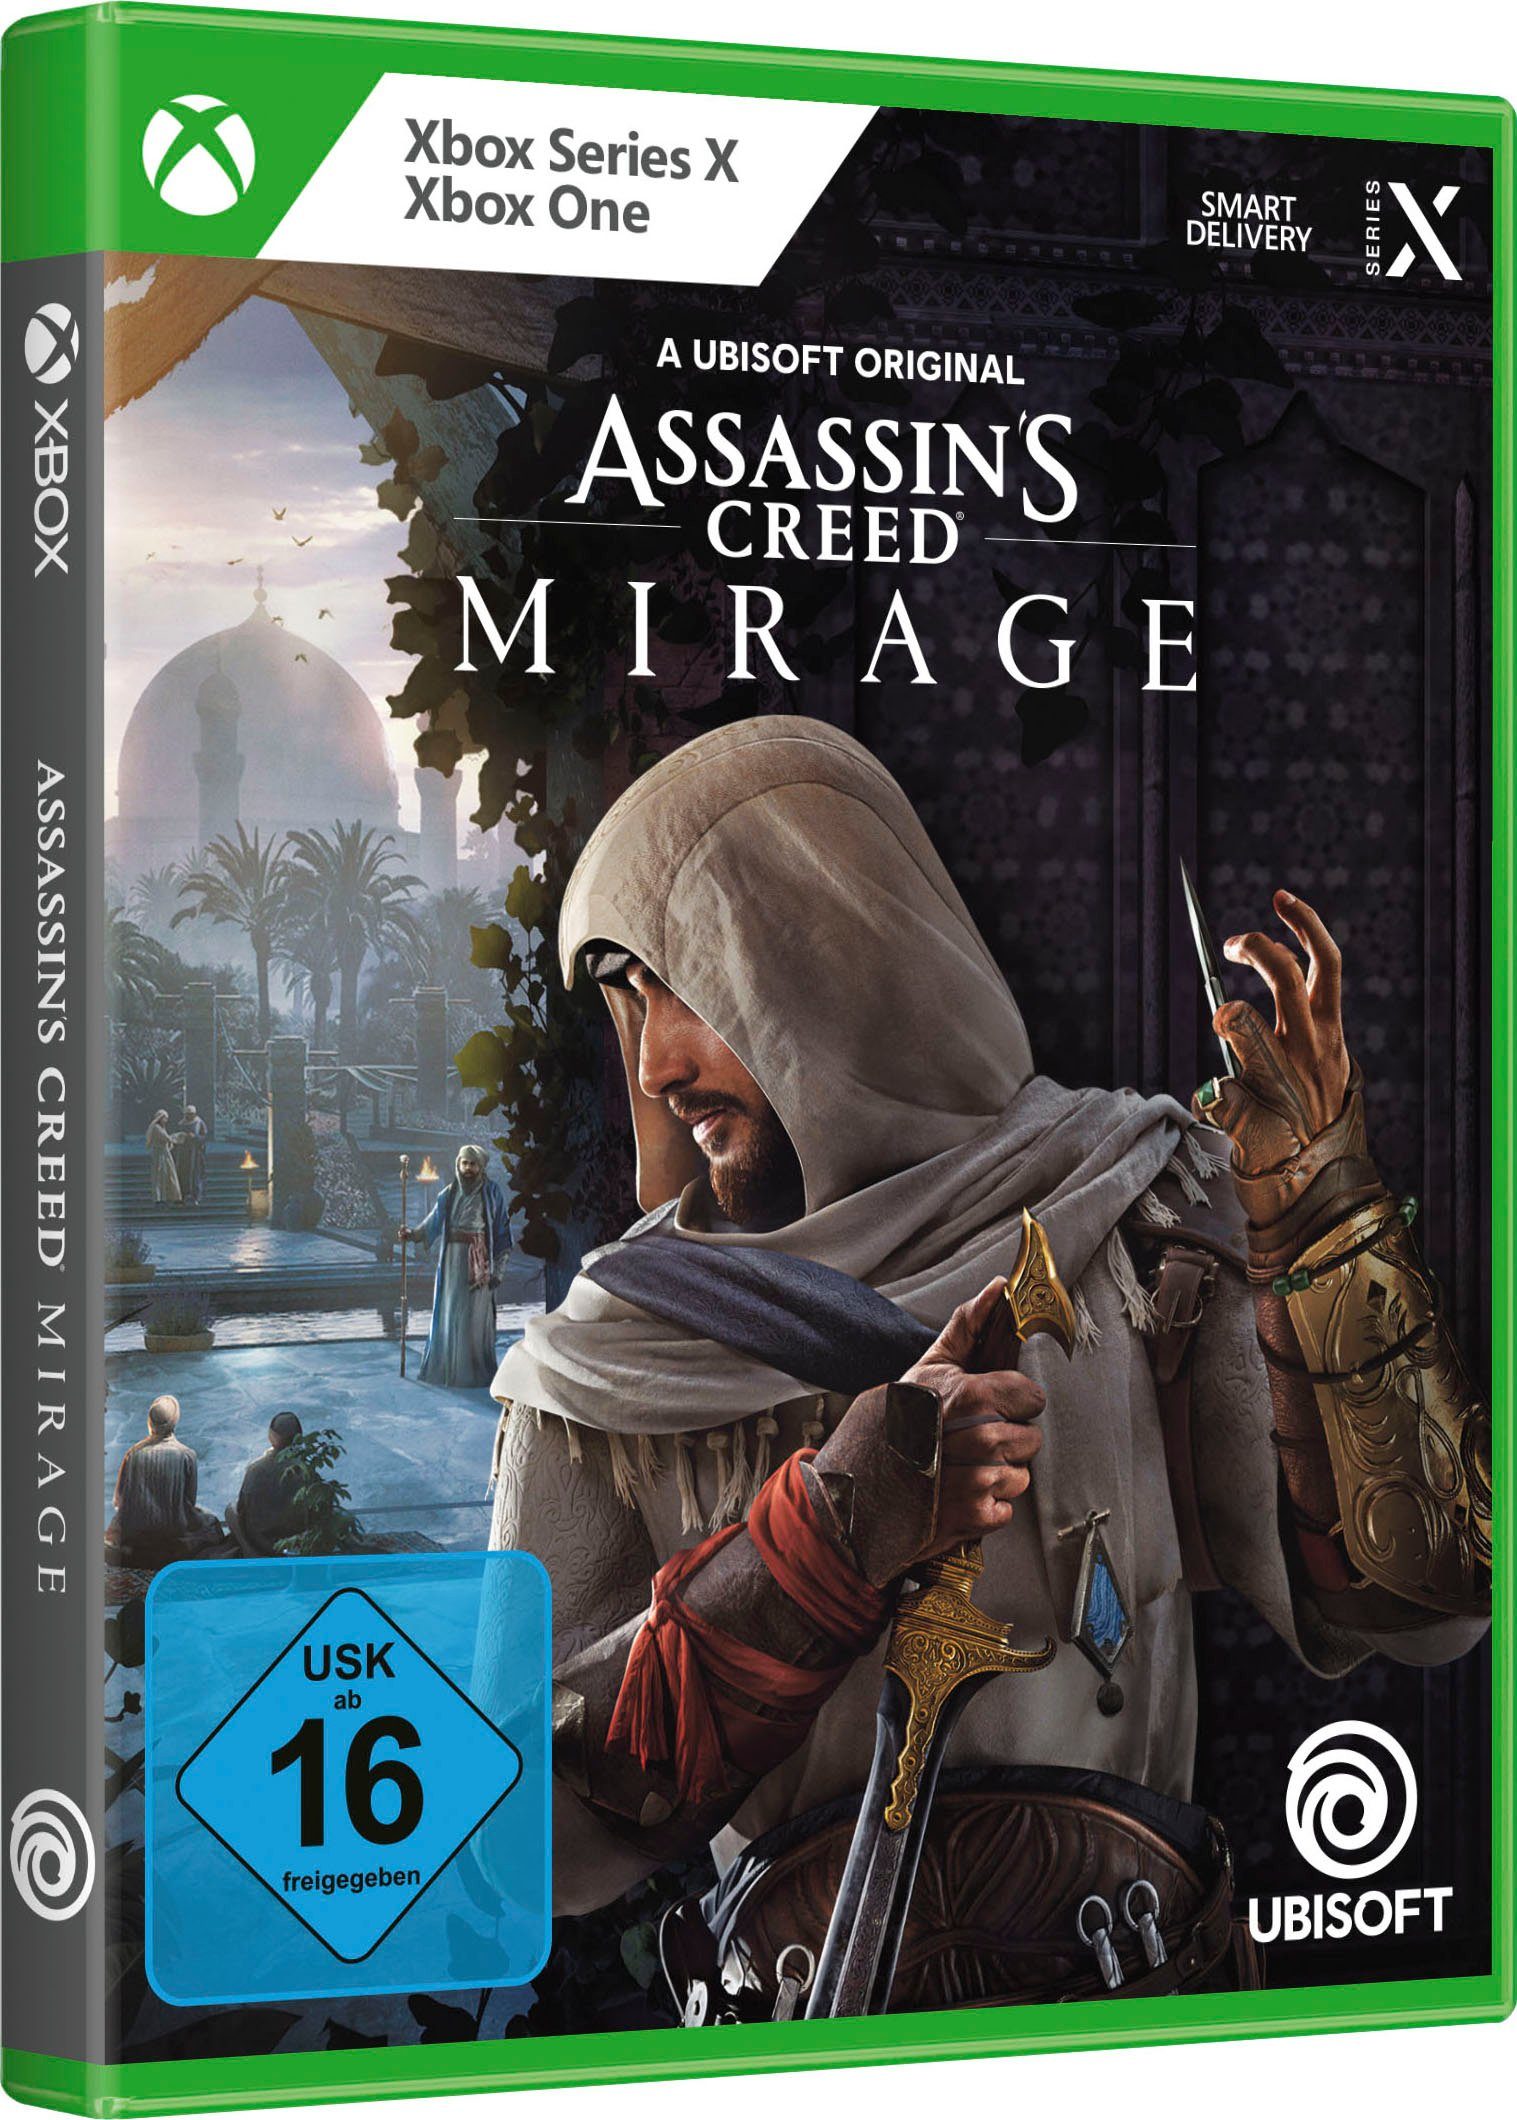 X Series Mirage Assassin's One, Creed Xbox UBISOFT Xbox